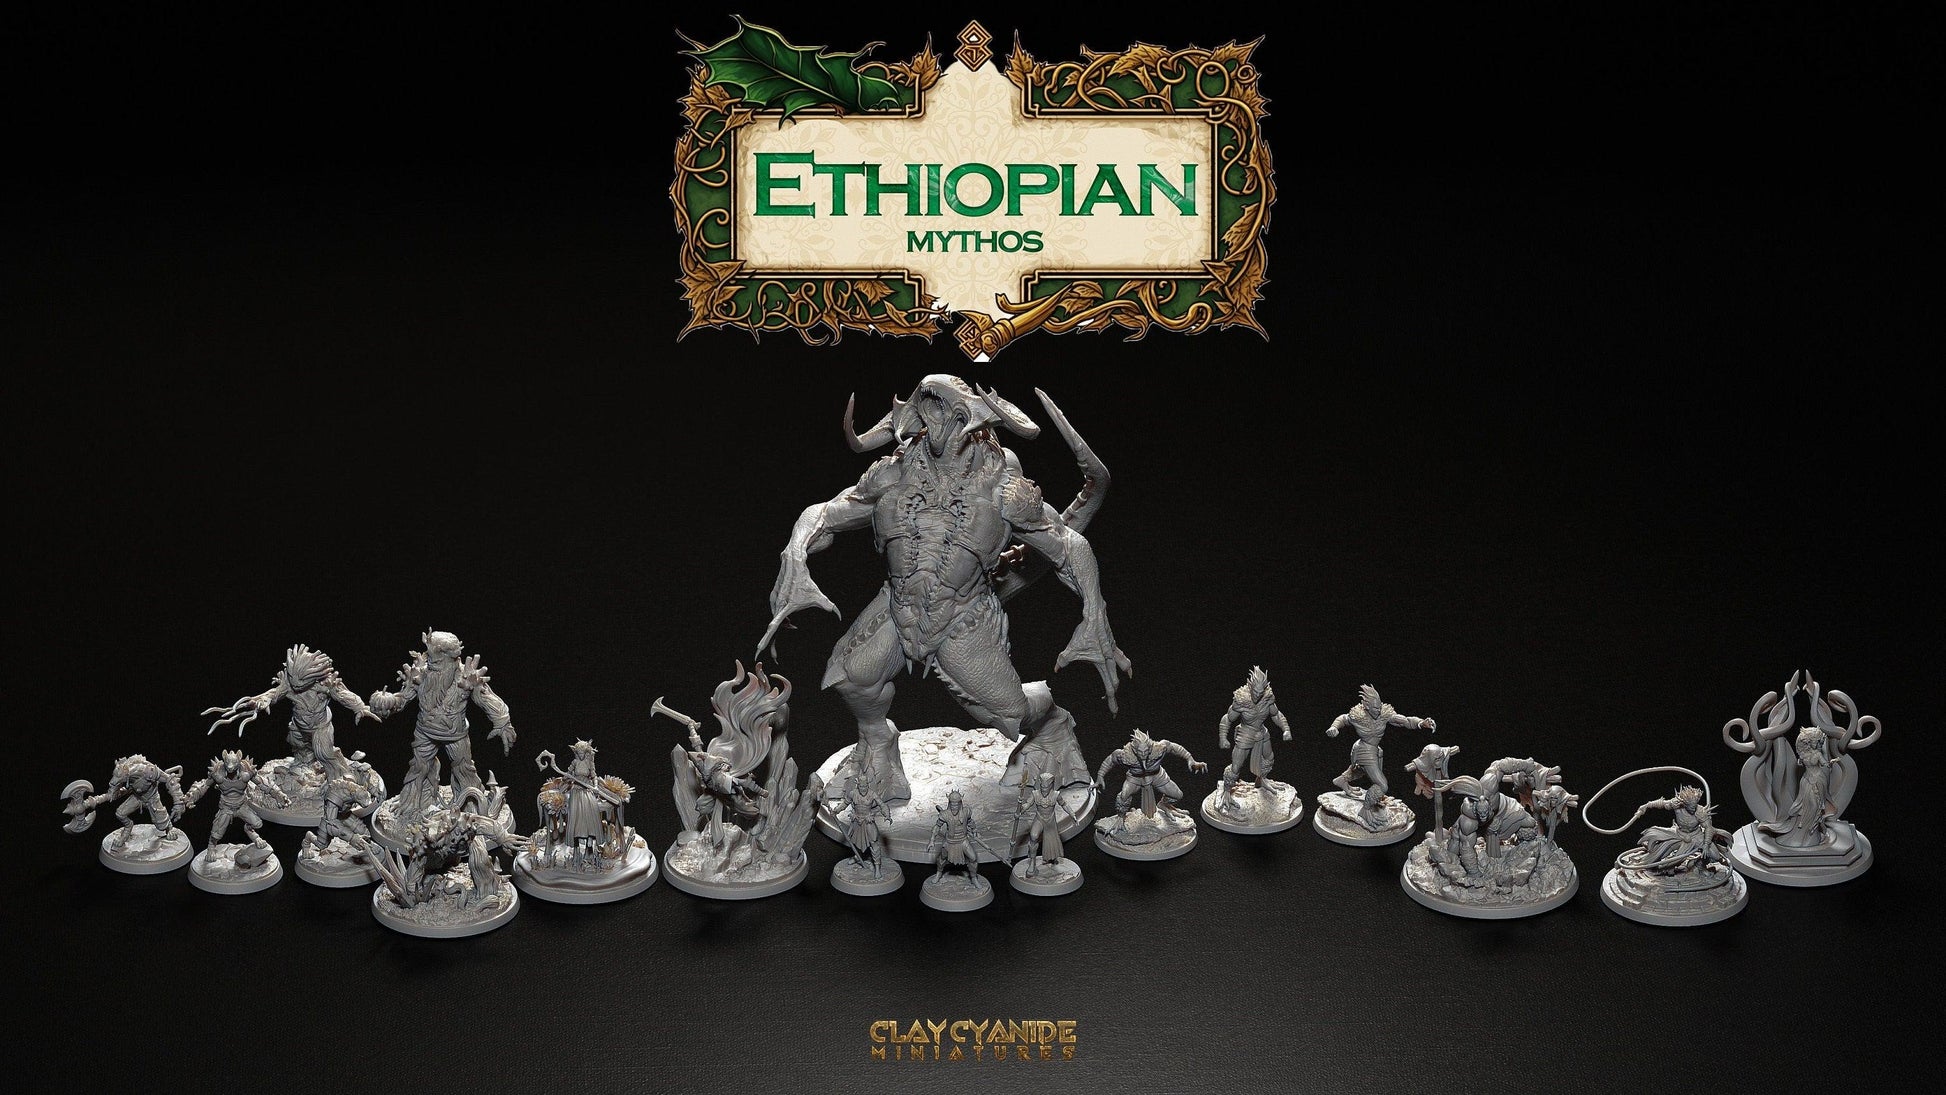 Warrior miniature | Adbar Orc Miniature Ethiopian Mythology DnD Miniature Dungeons and Dragons, DnD 5e african miniature fighter figure - Plague Miniatures shop for DnD Miniatures